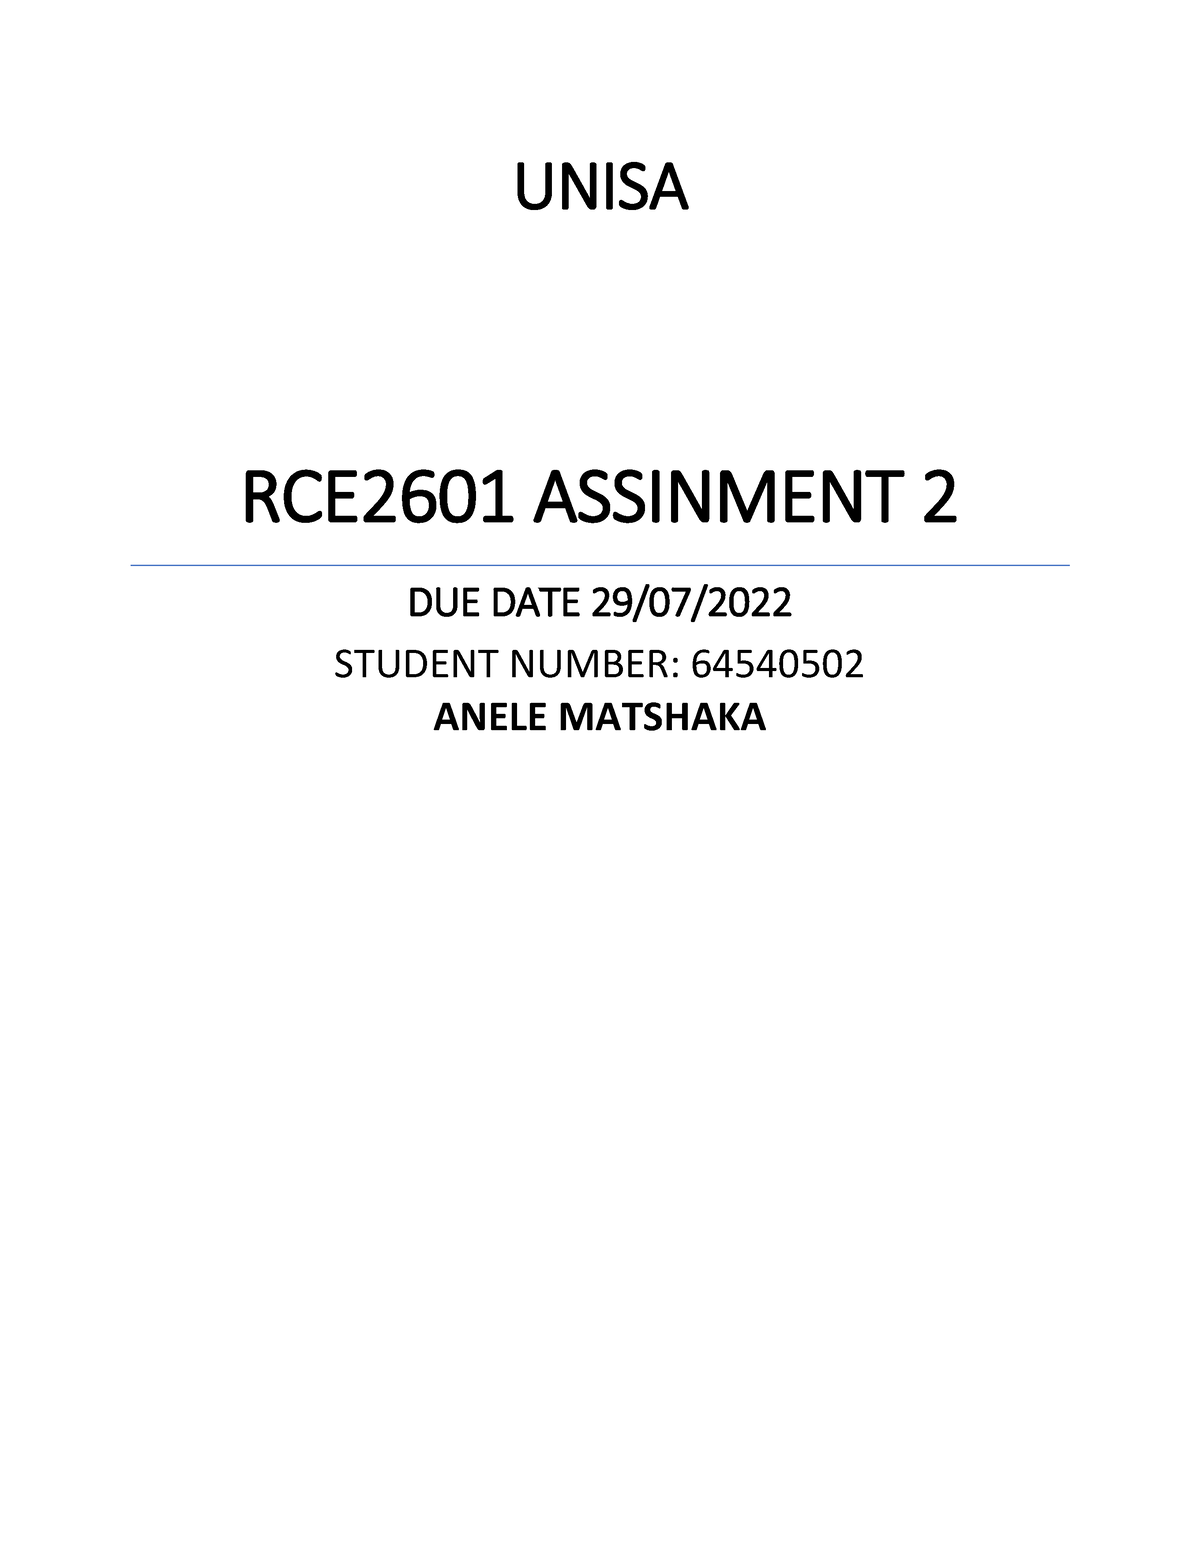 unisa assignment 2 due date